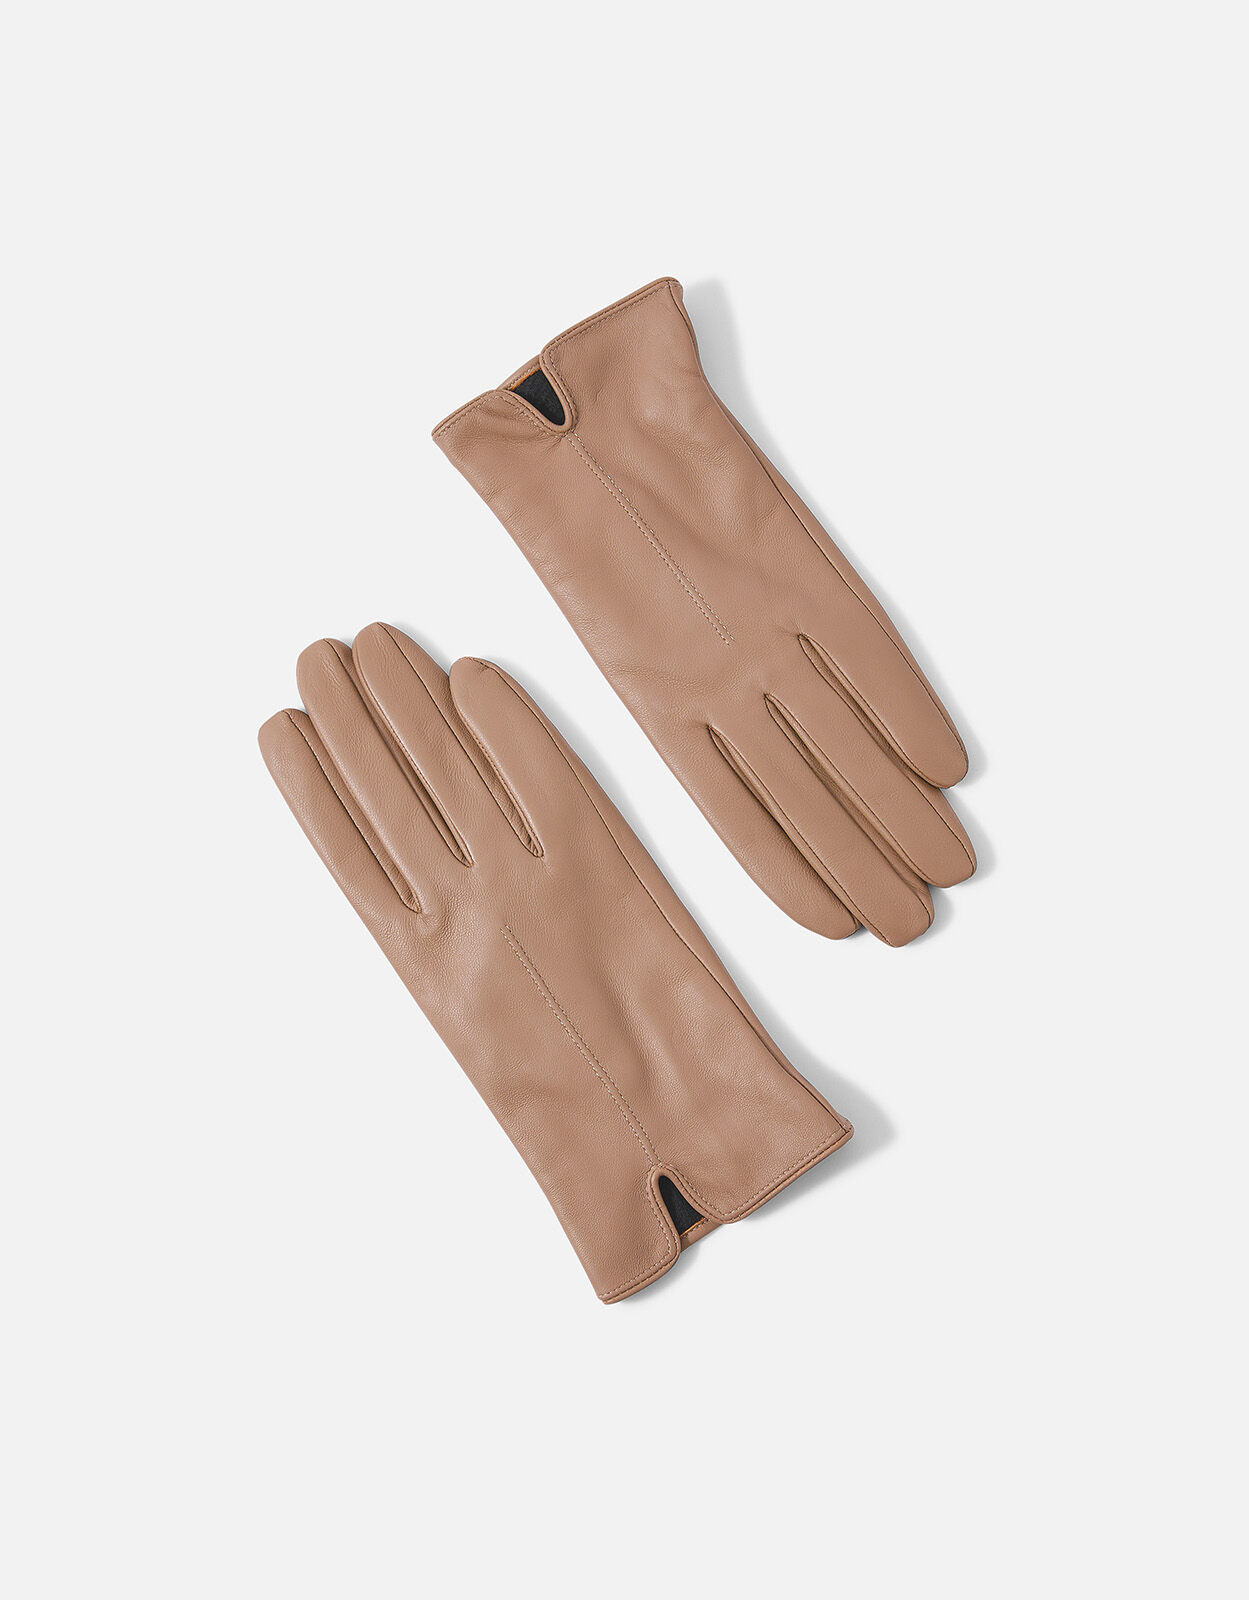 discount 90% WOMEN FASHION Accessories Gloves Brown/Black M NoName gloves 